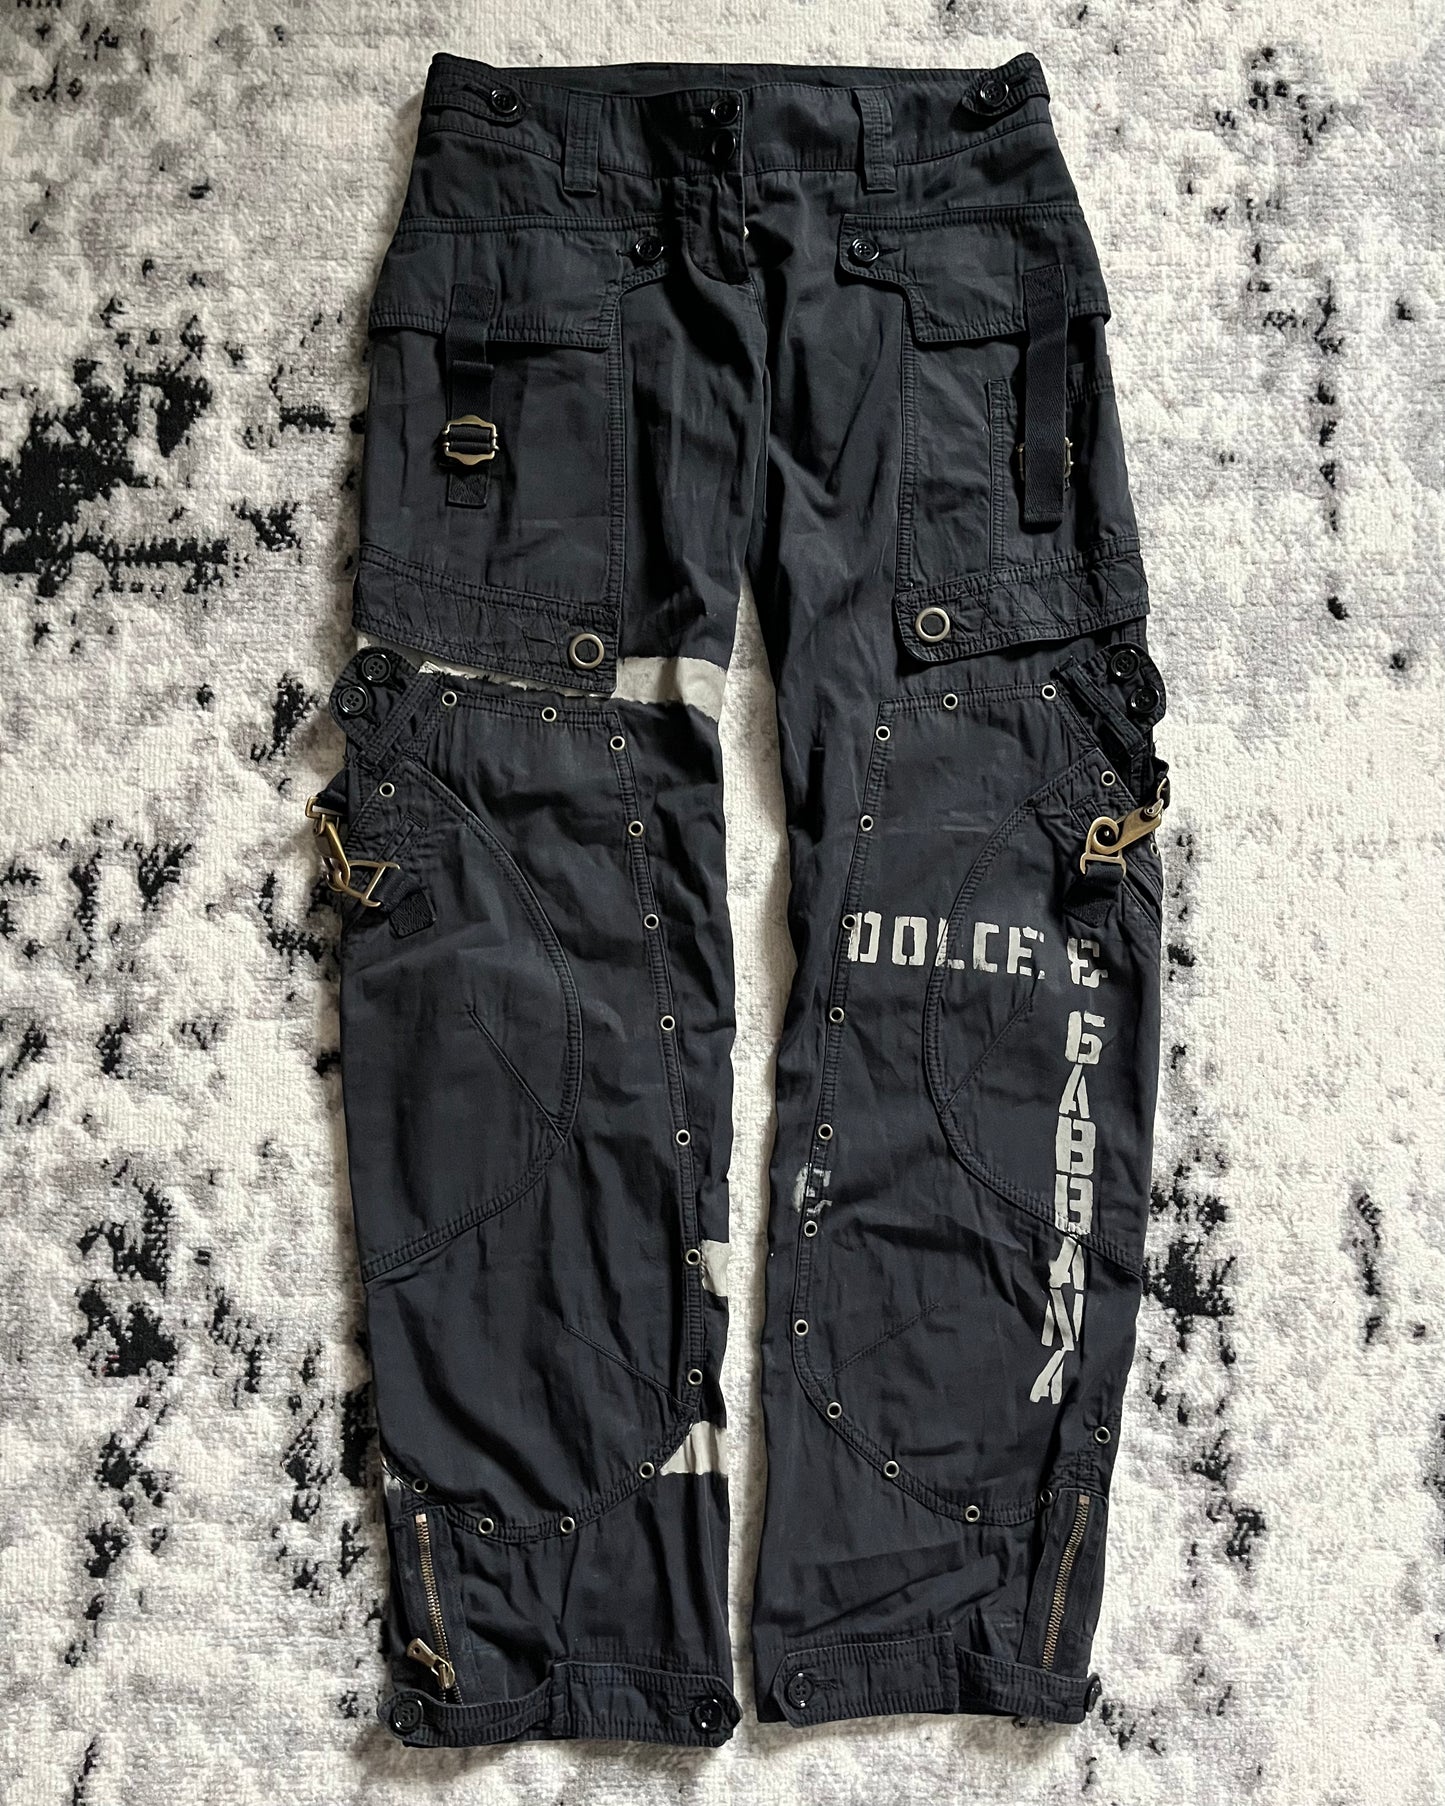 SS2004 Dolce & Gabbana 3D Reinforced Black Painted Cargo Pants (S)